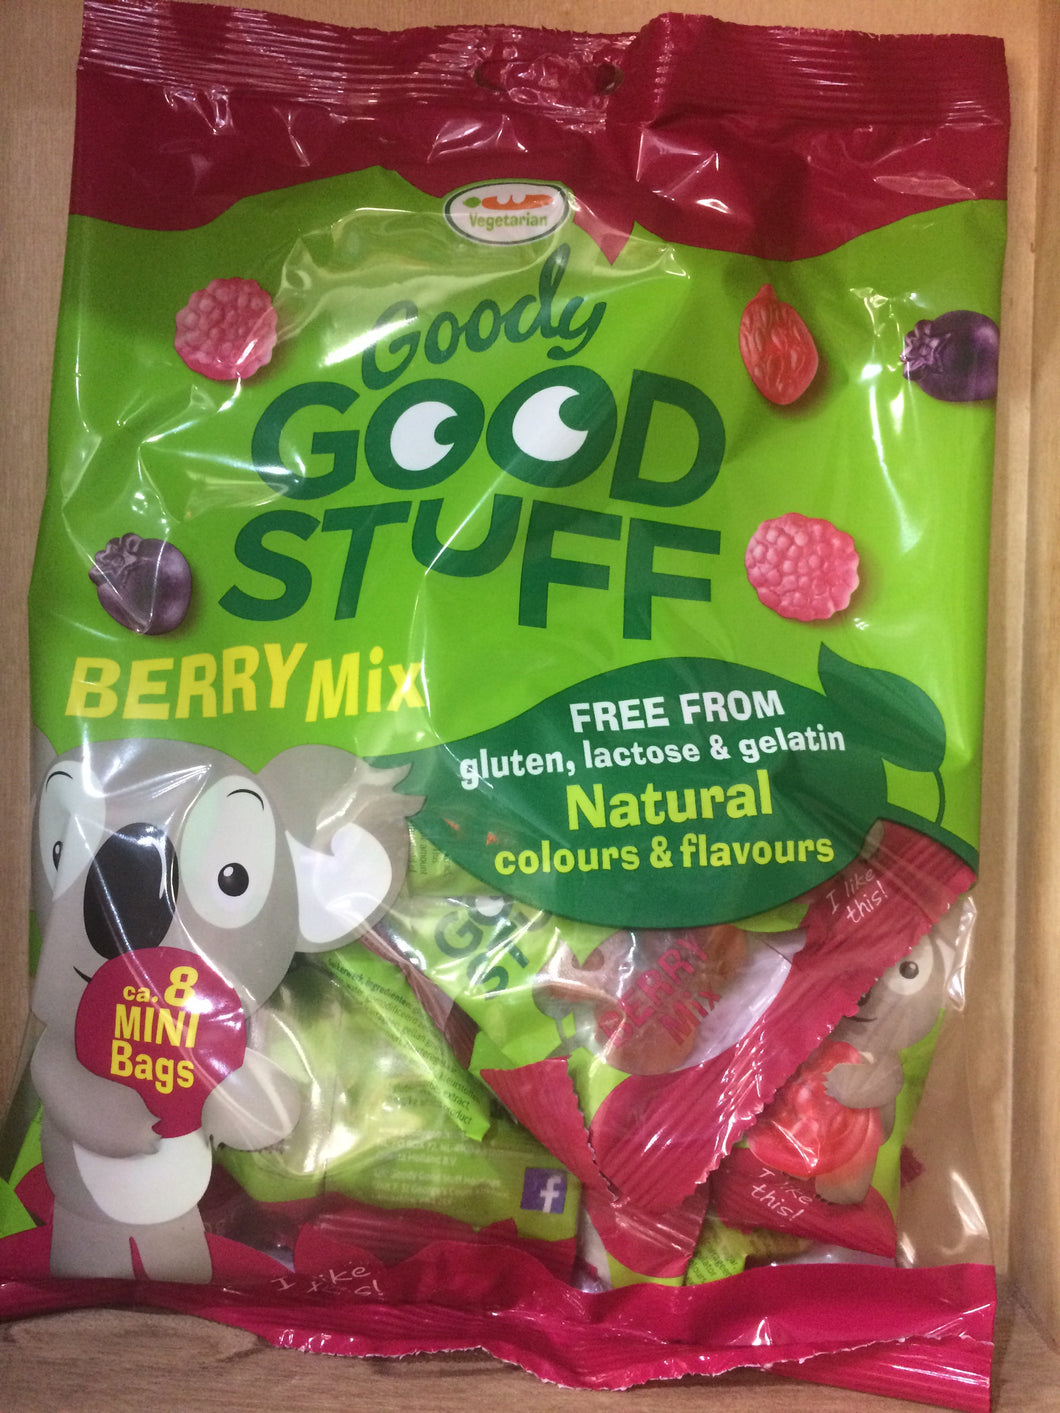 Goody Good Stuff Berry Mix 8 Mini Bags